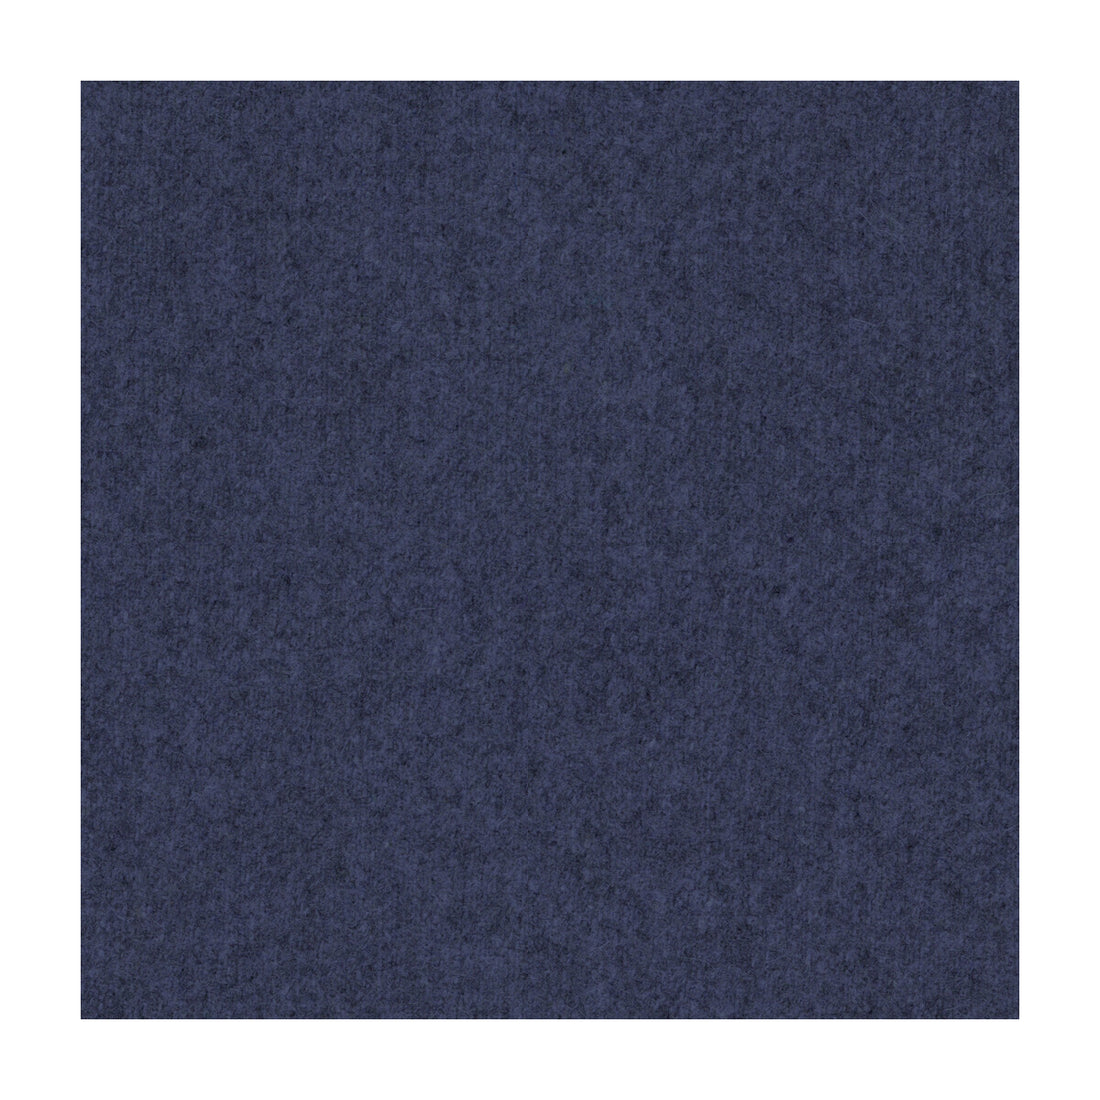 Skye Wool fabric in blueberry color - pattern 2017118.5.0 - by Lee Jofa